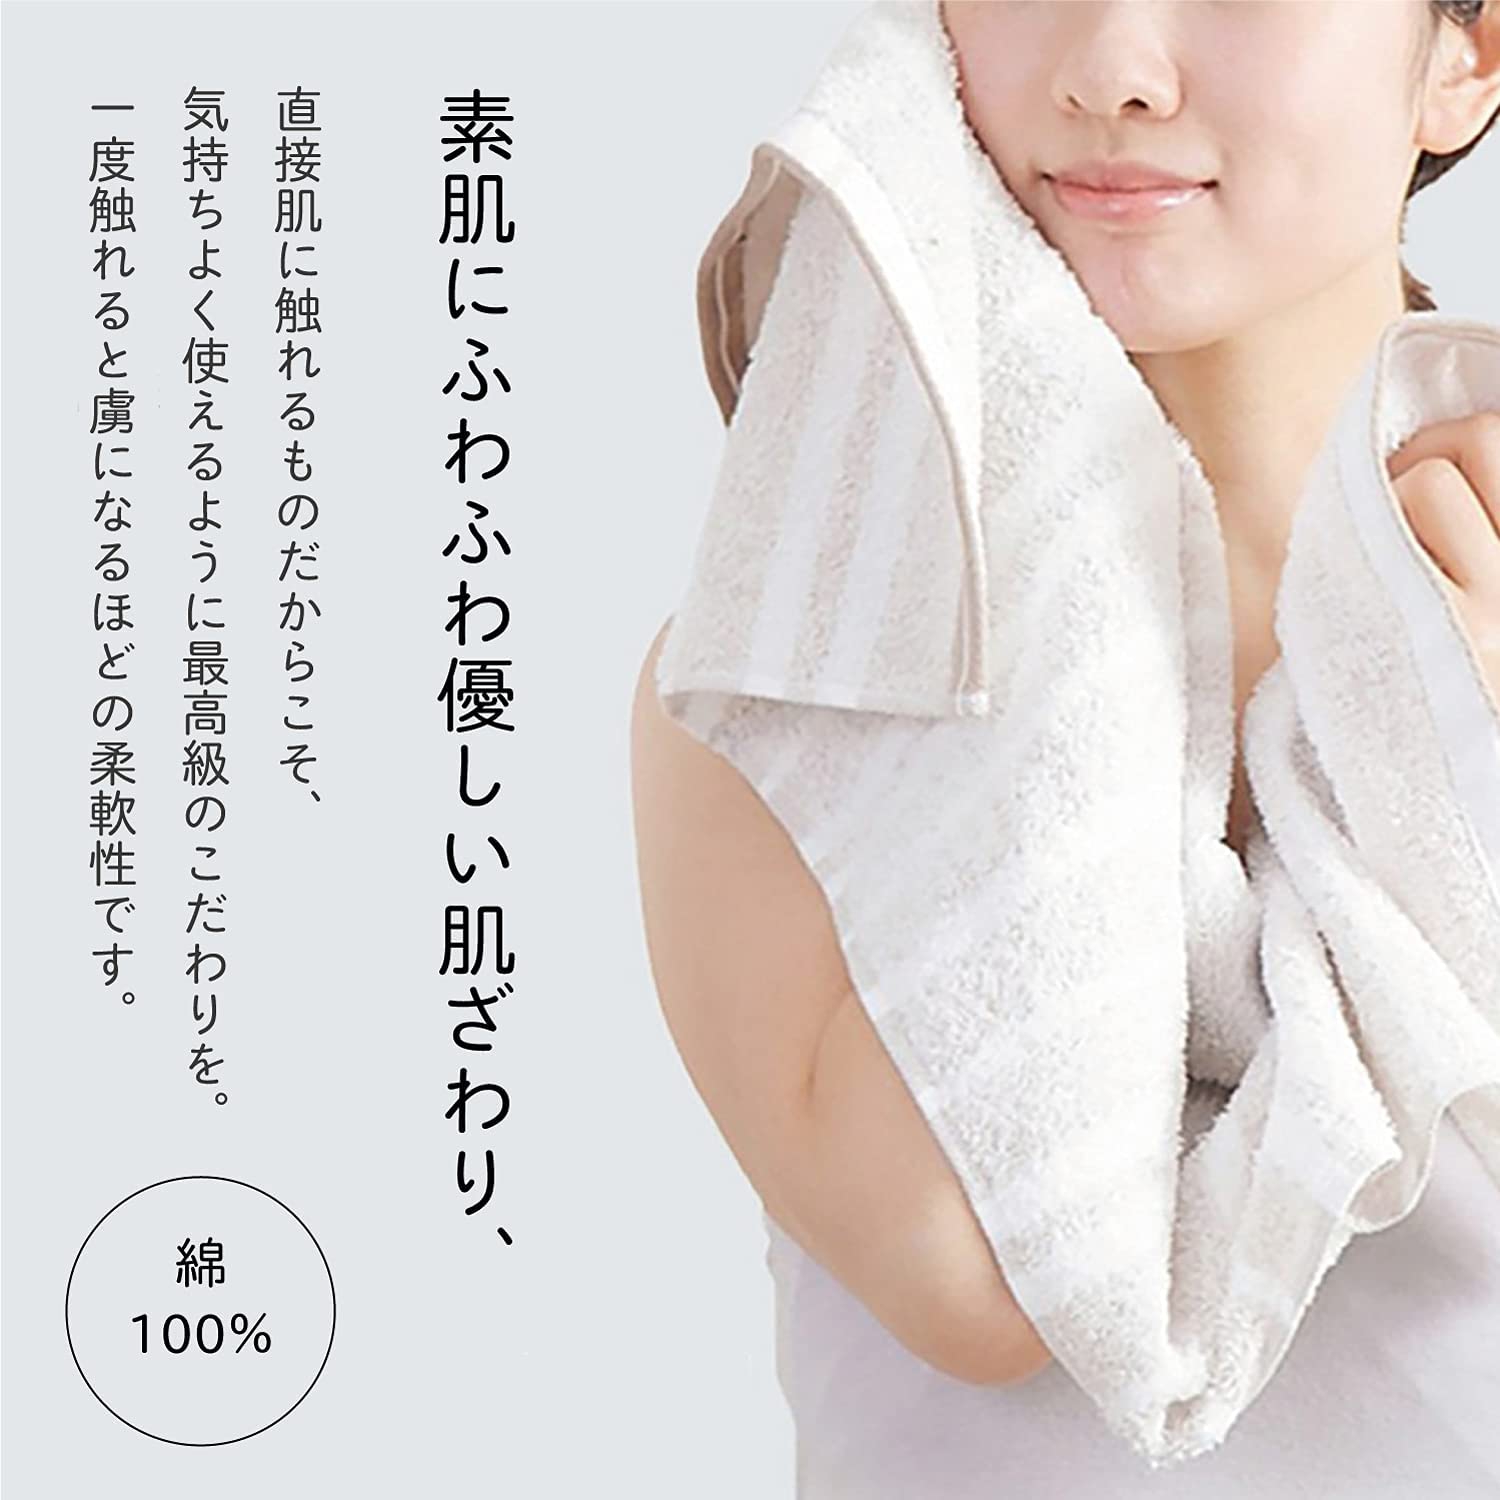 TANGONO(タンゴノ) Border towel バスタオルの商品画像3 